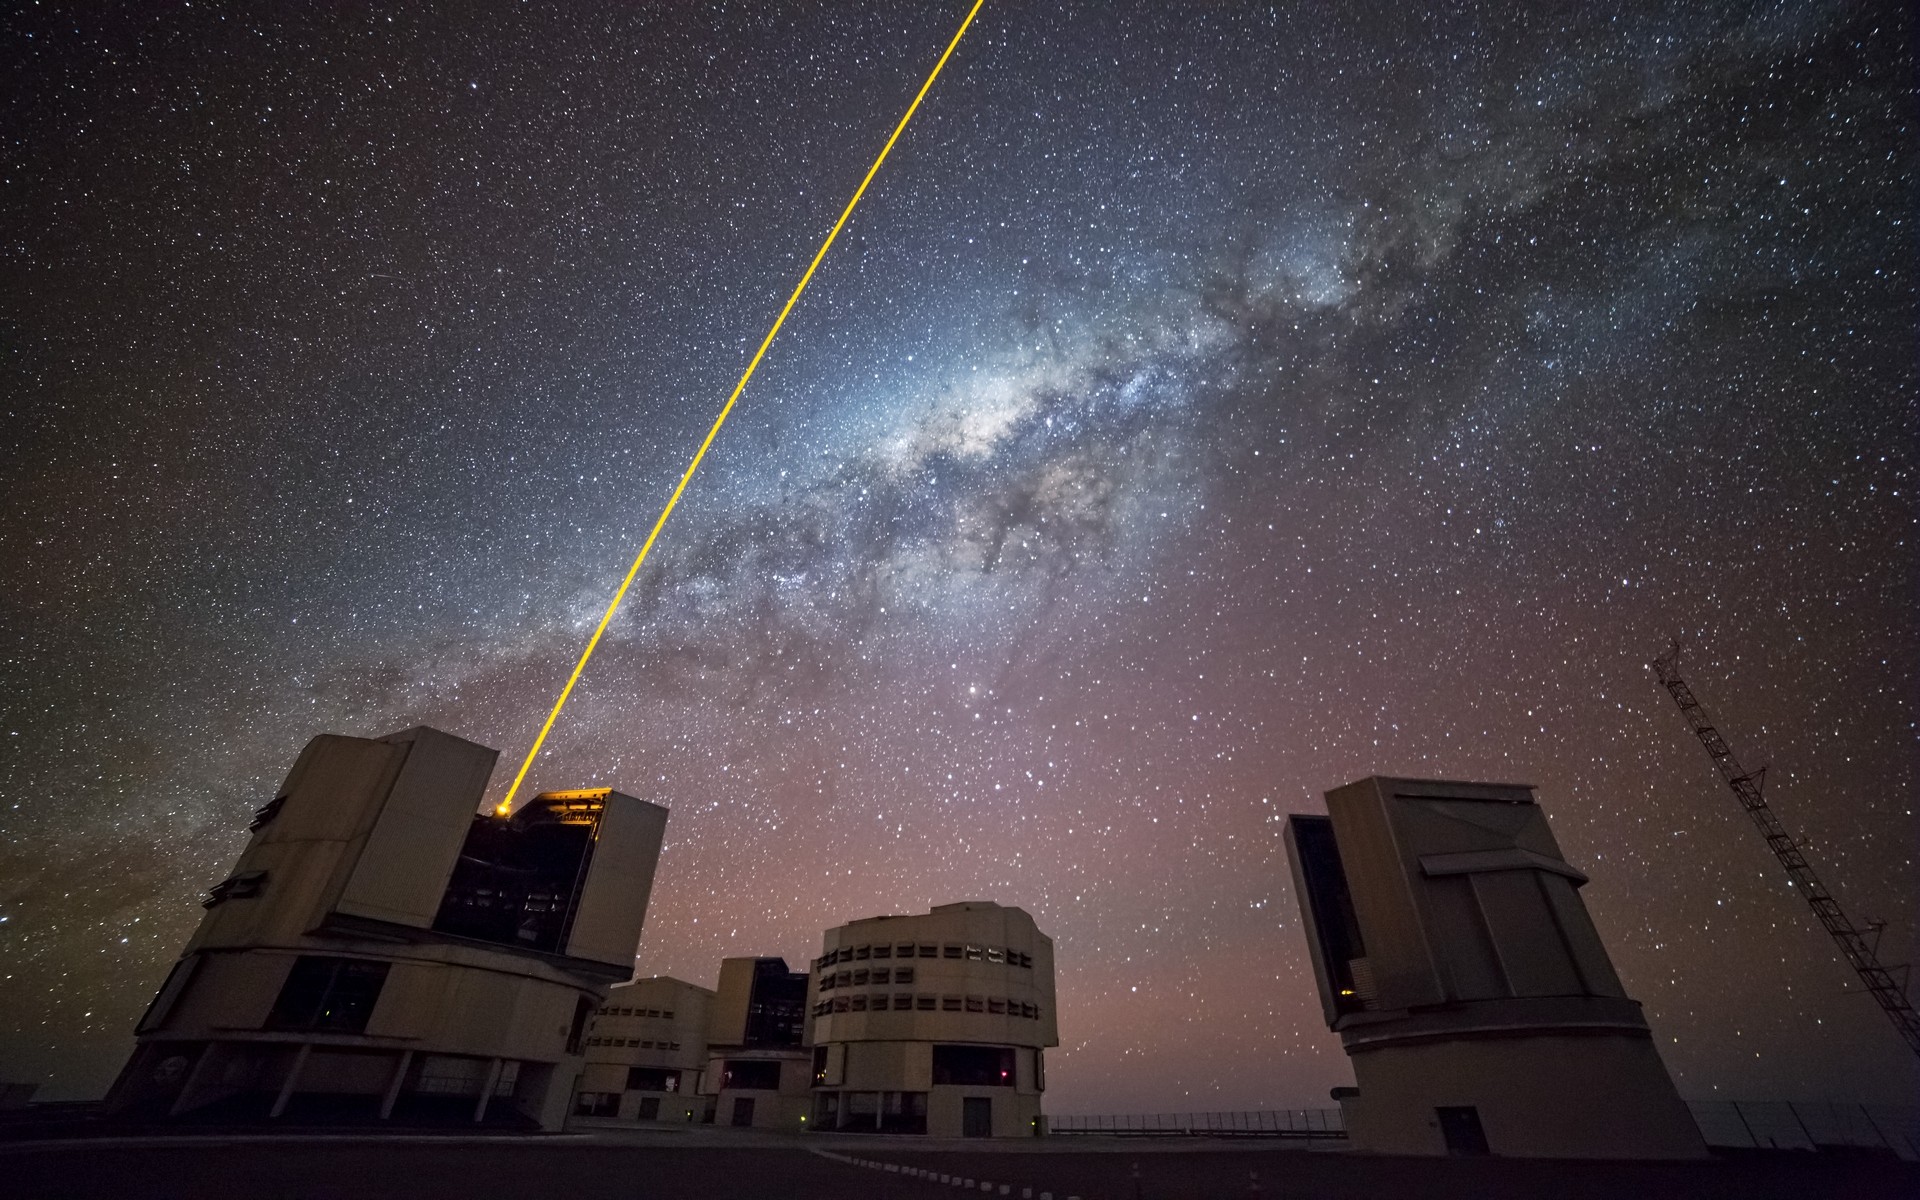 General 1920x1200 space Milky Way ALMA Observatory Atacama Desert Chile technology starry night universe building South America stars sky